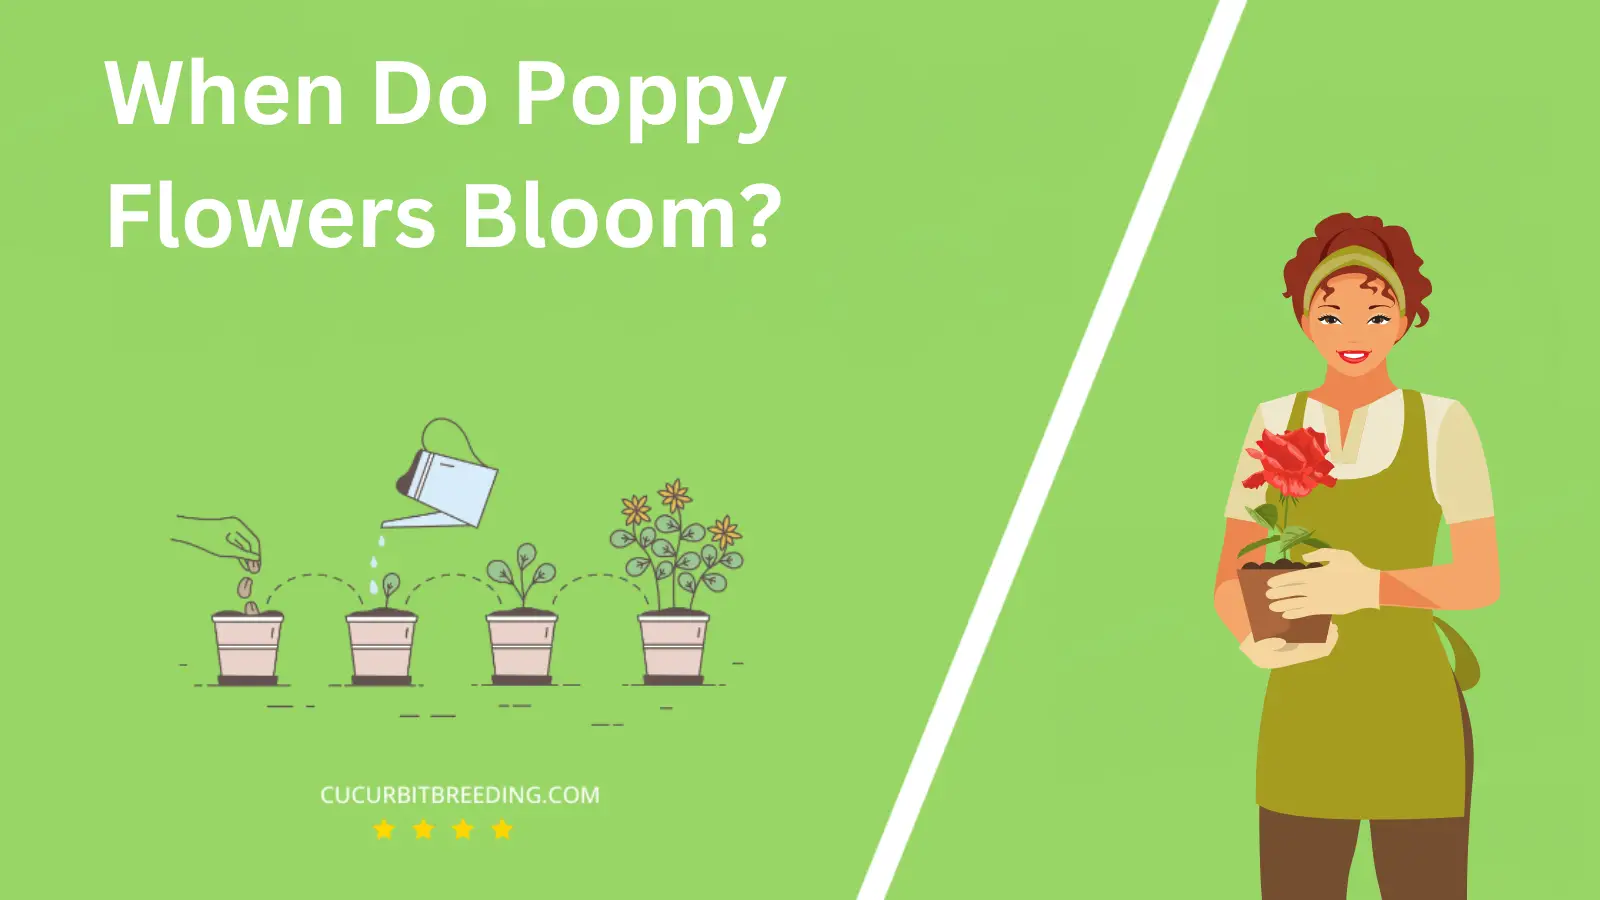 When Do Poppy Flowers Bloom?